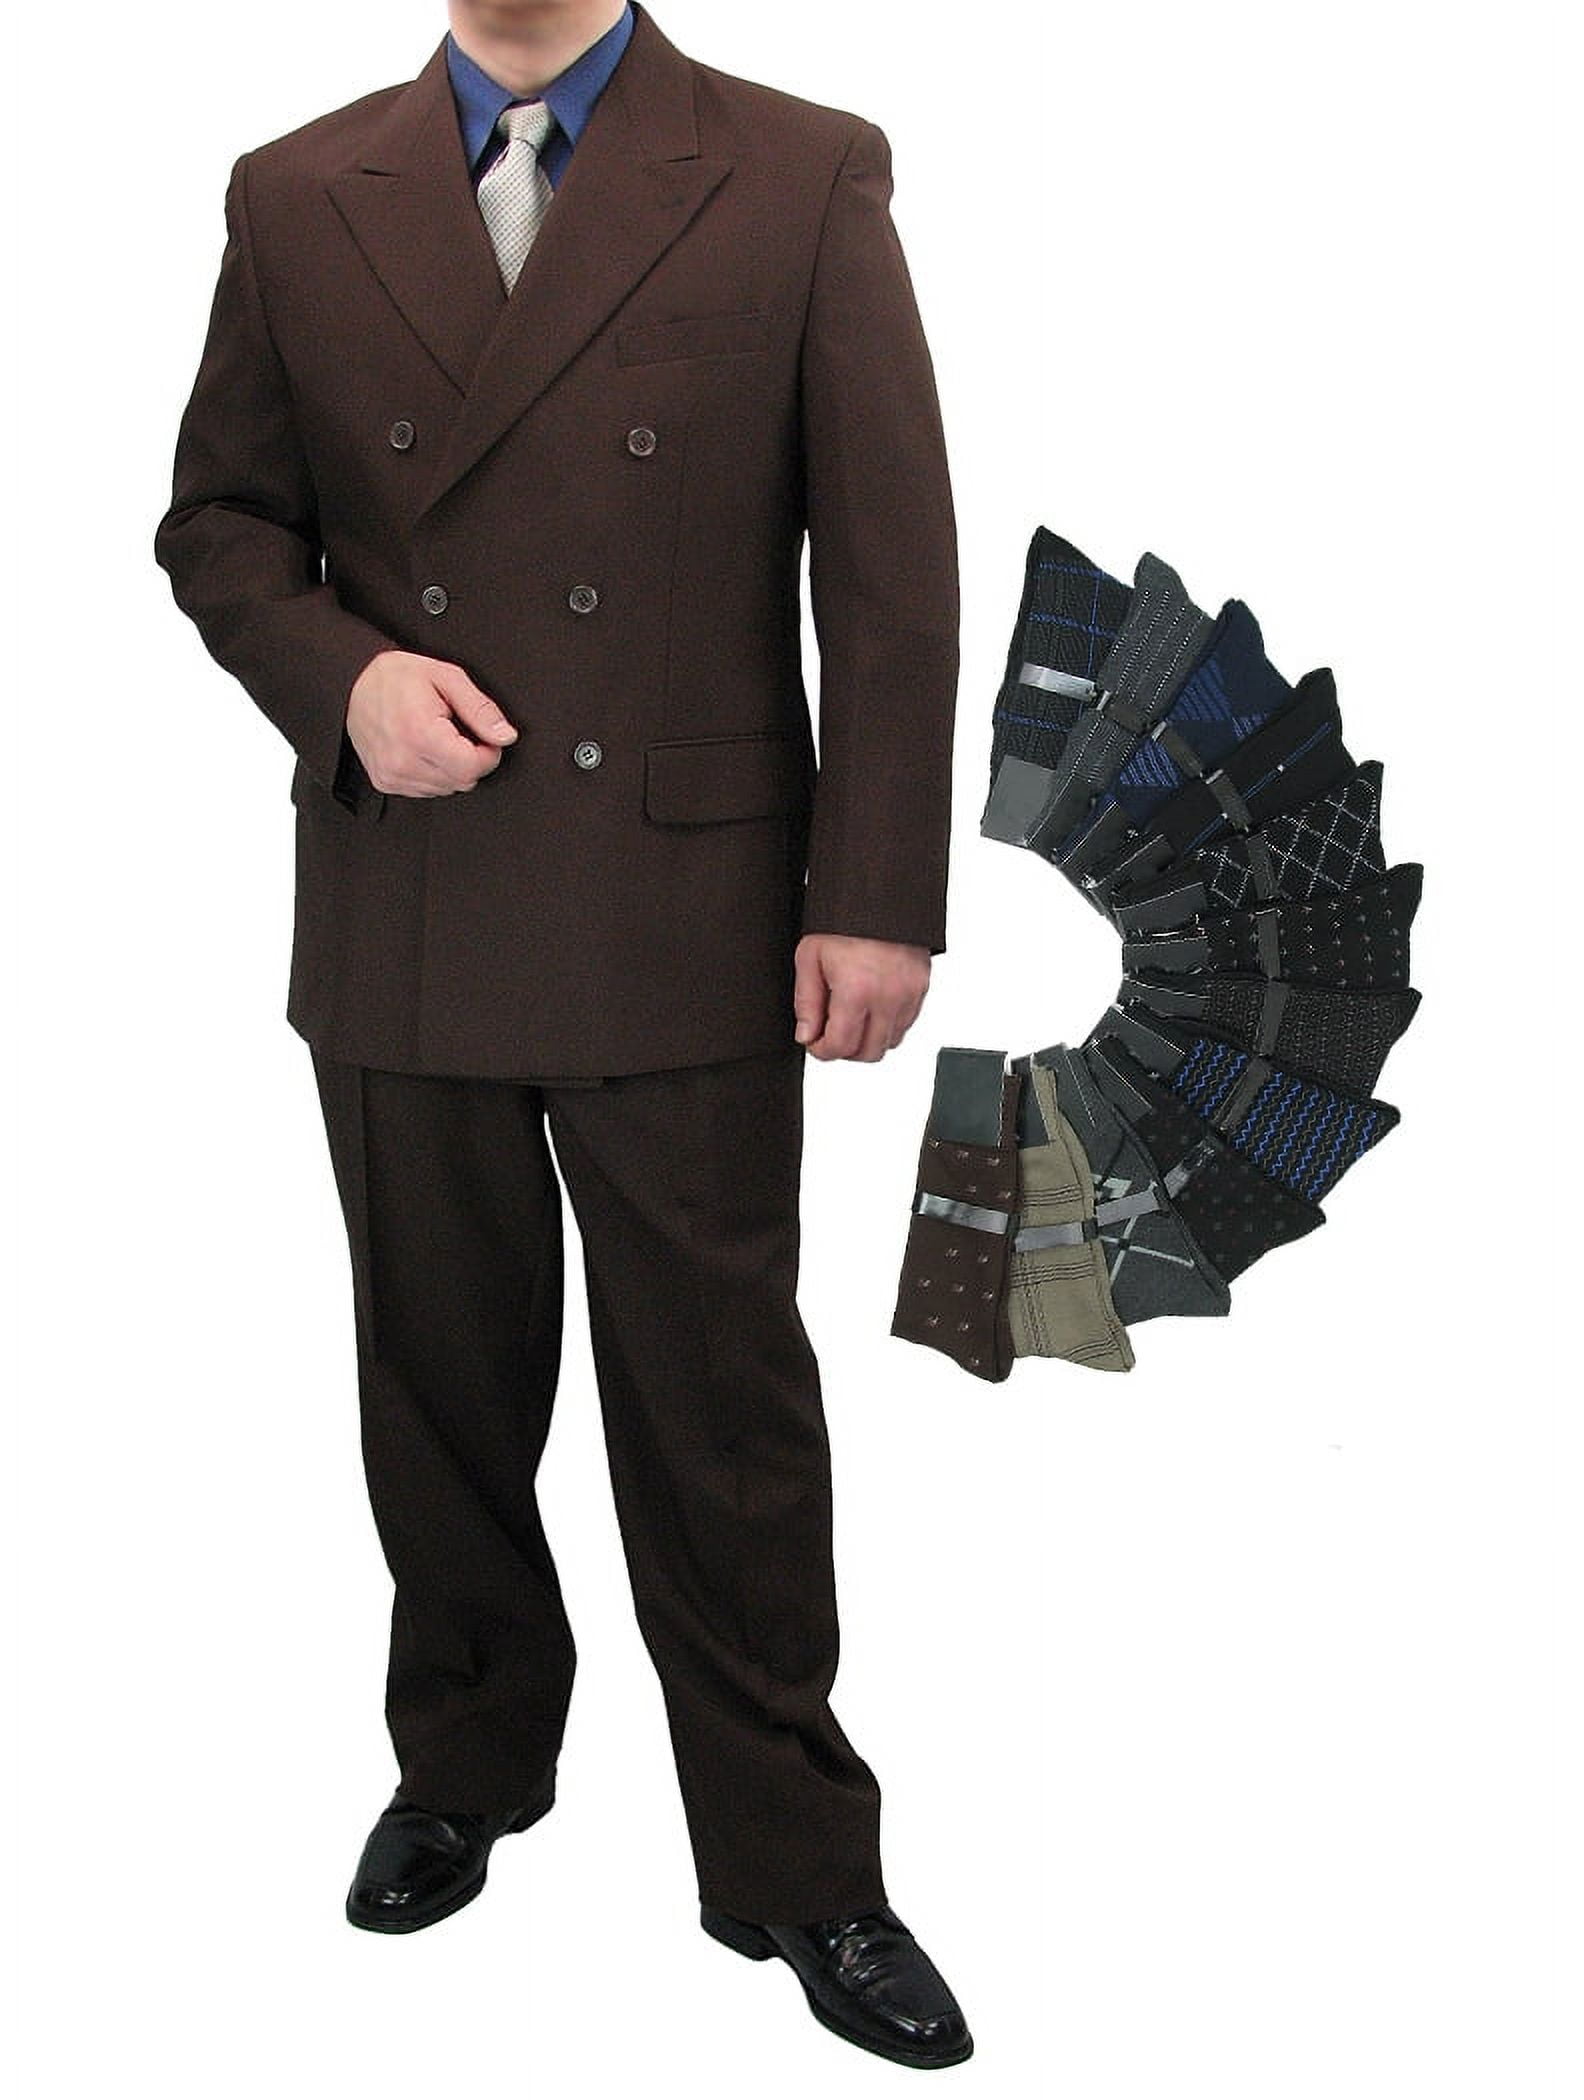 dappermenblog: “Chocolate suit @absolutebespoke #DAPPERMEN ” | Classy suits,  Mens fashion edgy, Suit fashion